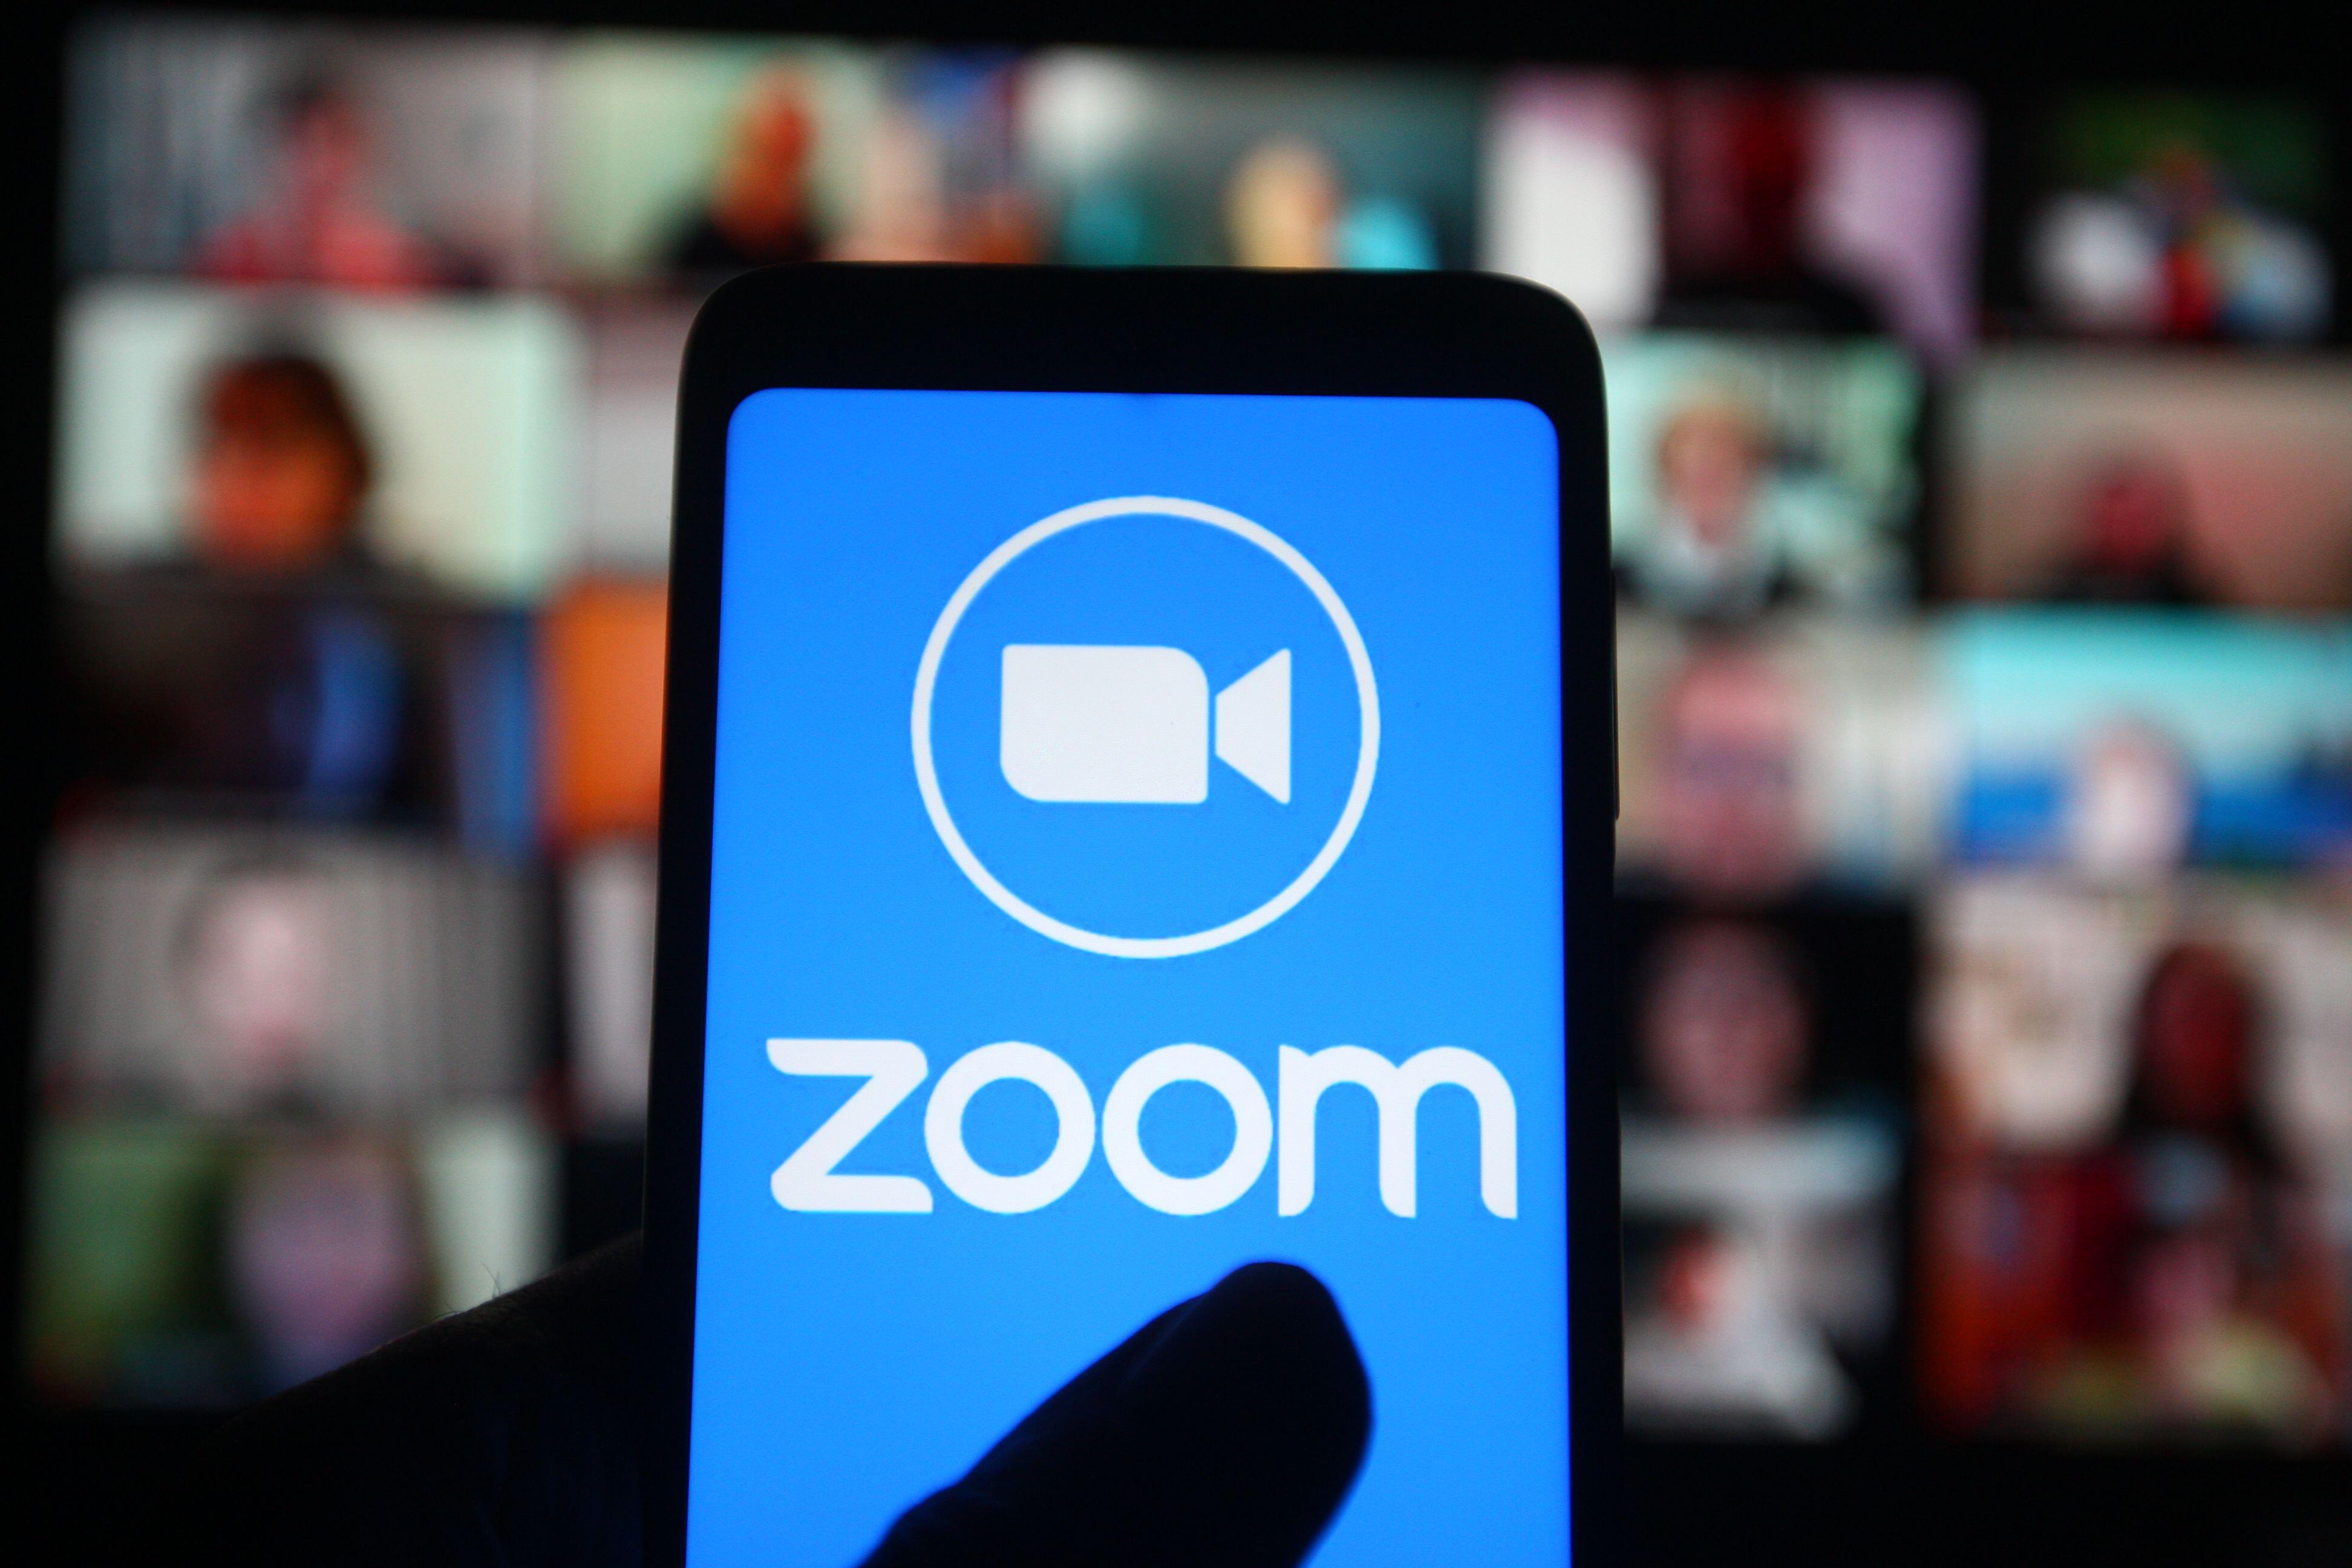 Zoom logo on phone screen